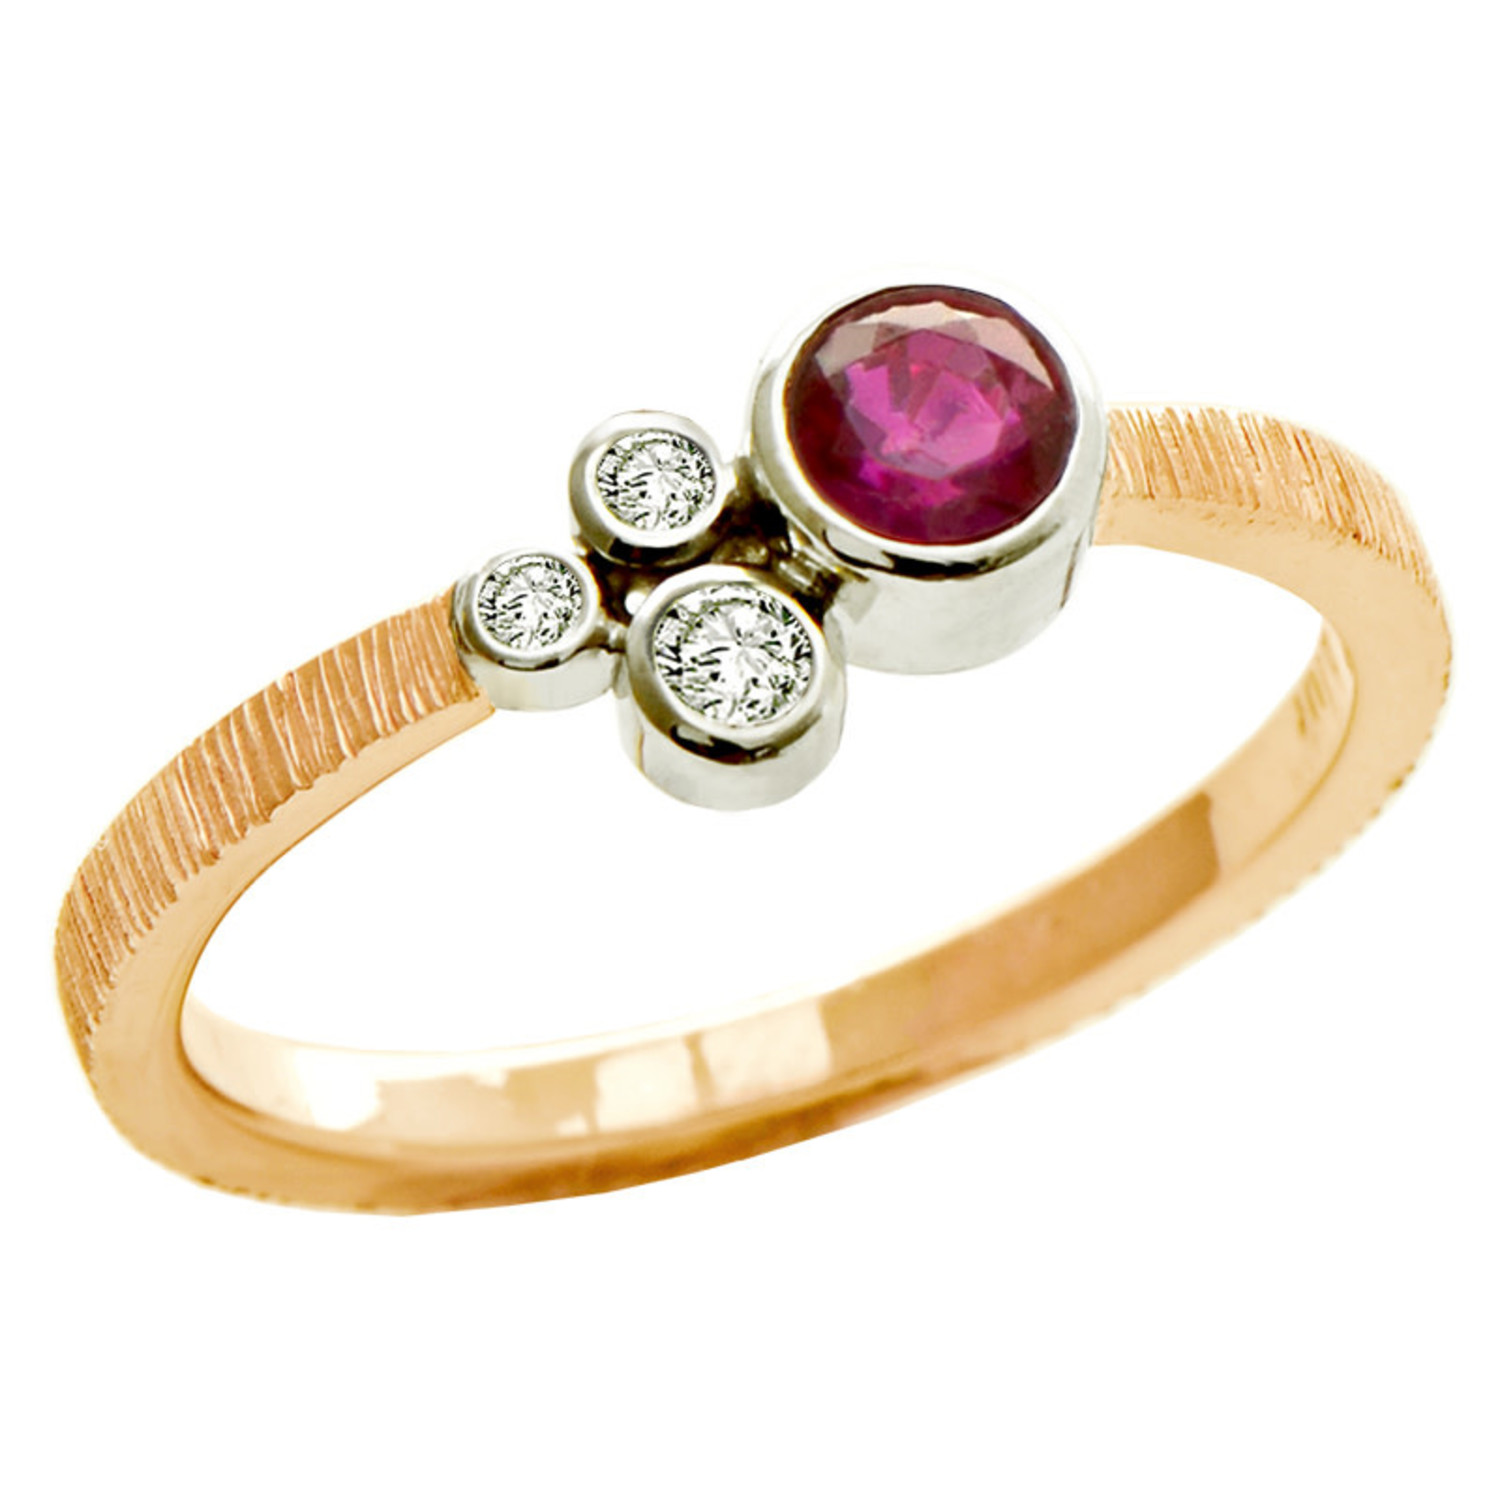 3.0 Cts Natural Ruby Gemstone Solid 18k White Gold Ring For Men #416 | eBay